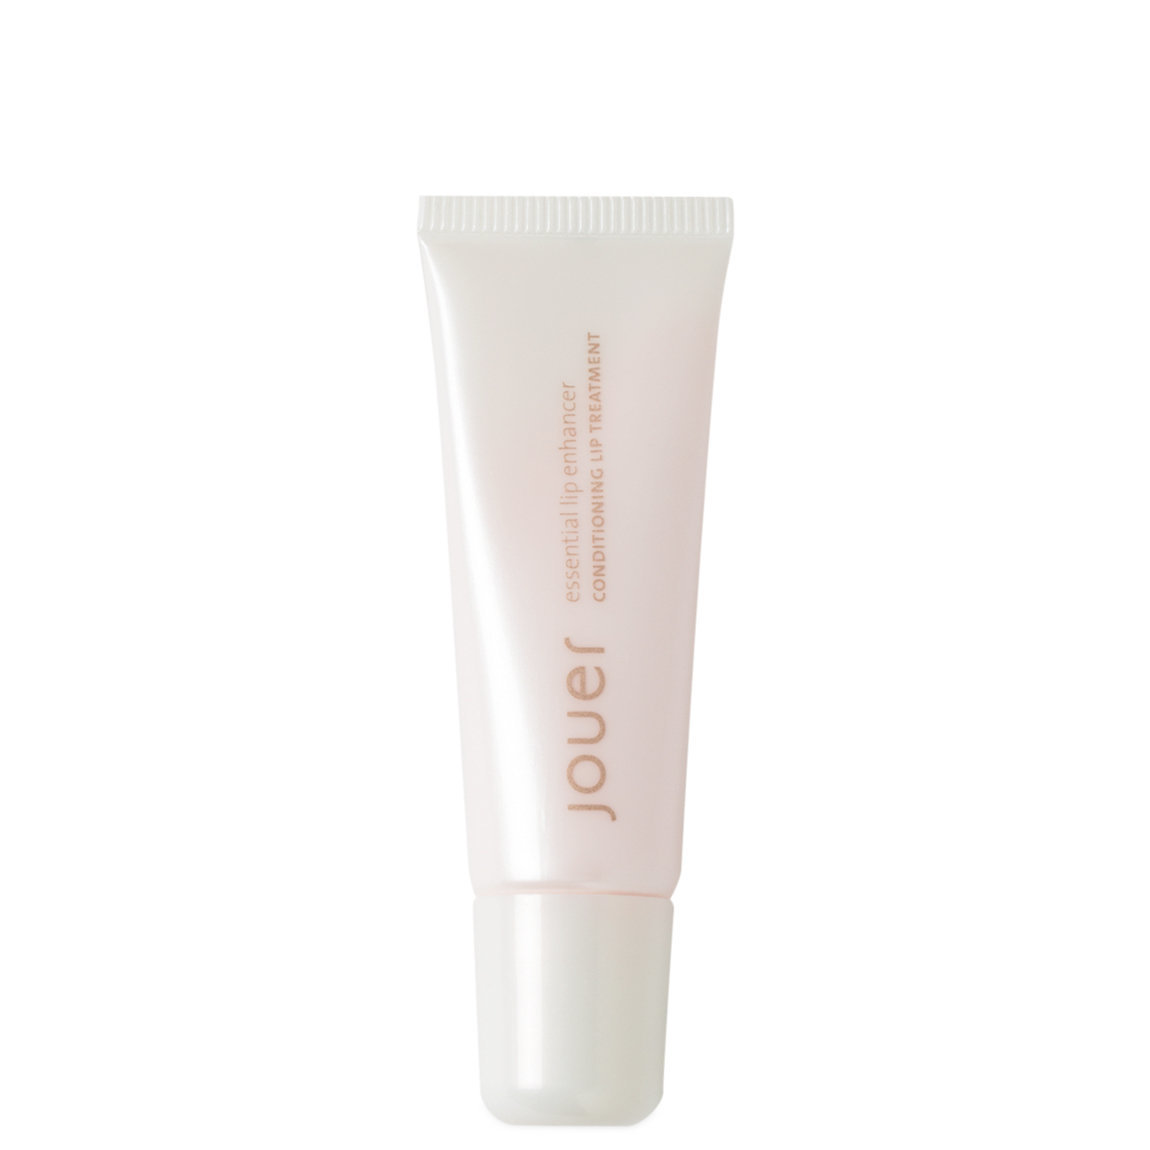 Jouer Cosmetics Essential Lip Enhancer product smear.